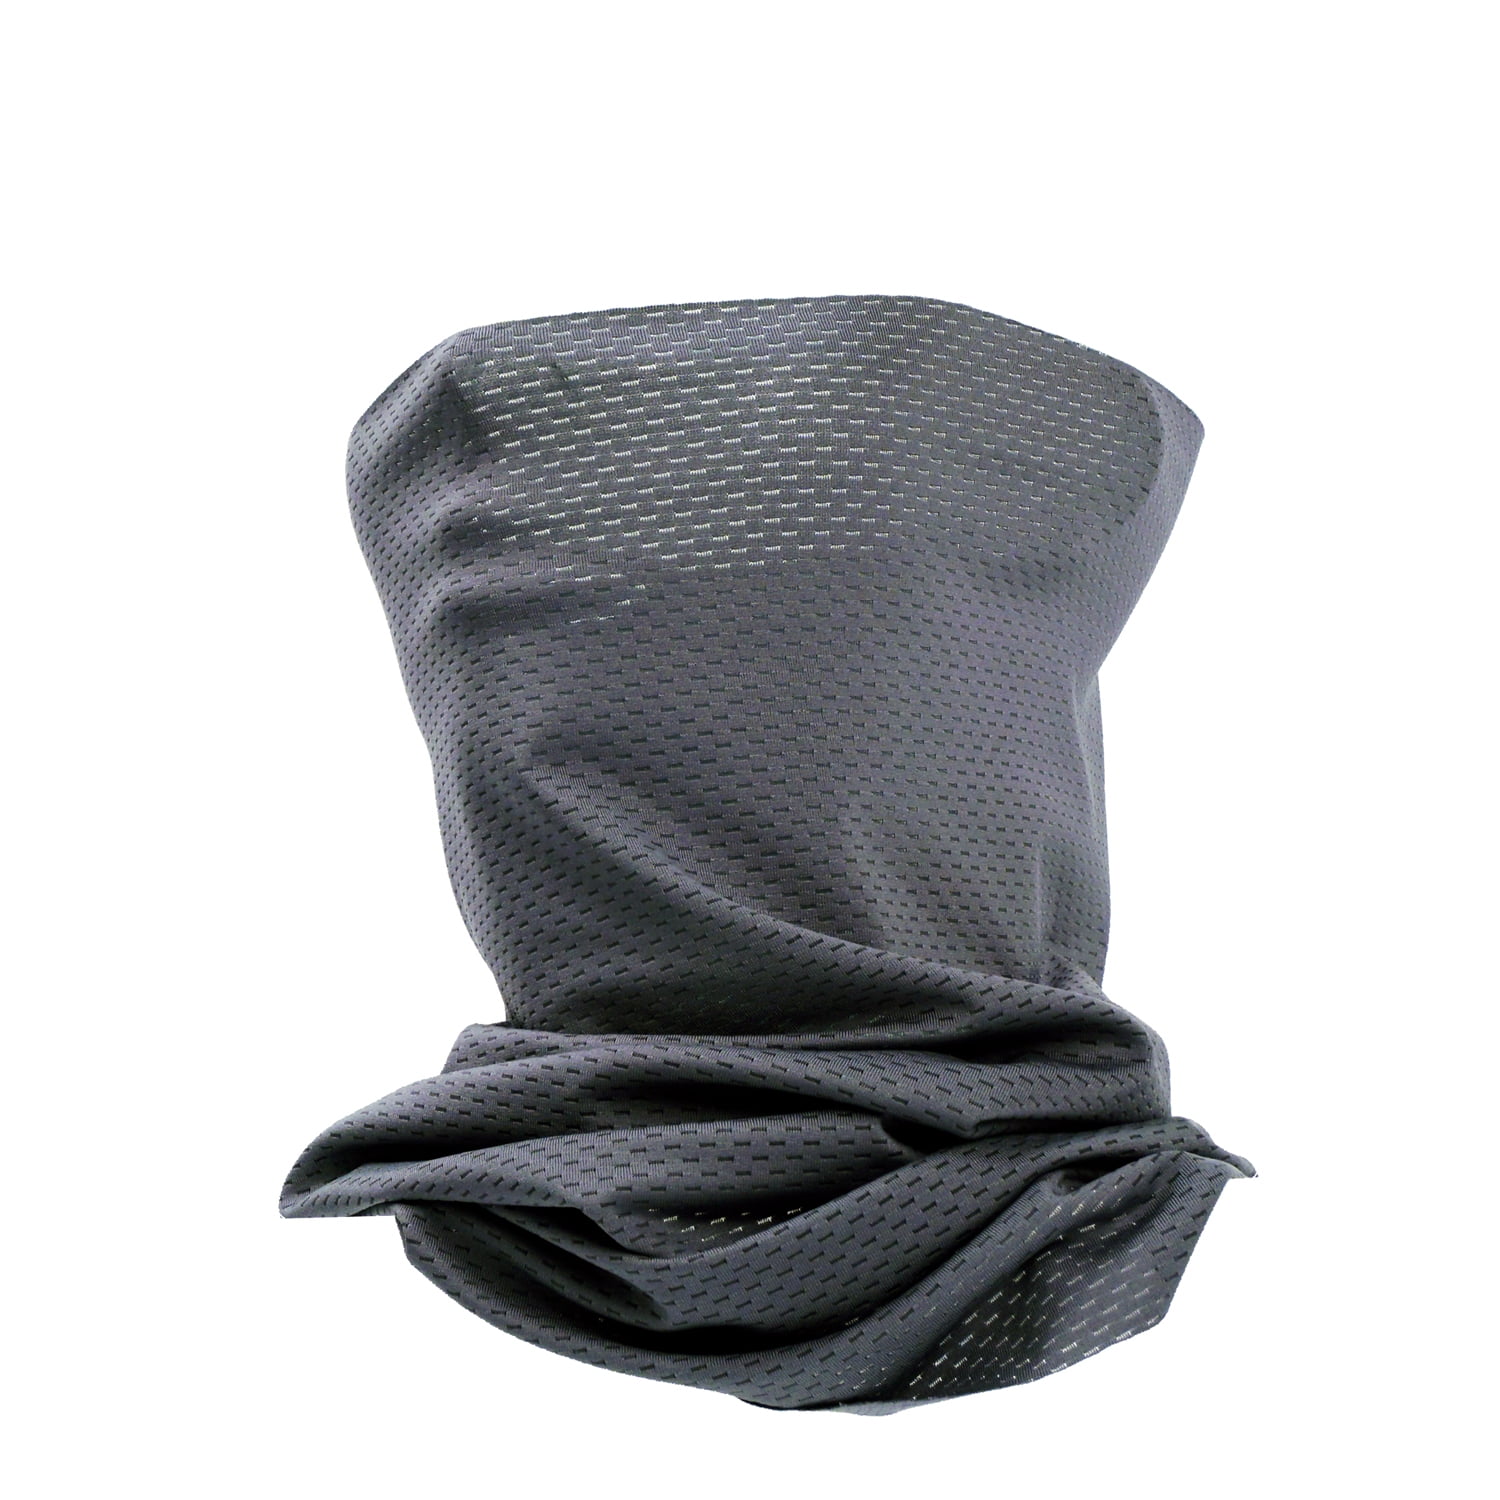 Details about   Lot 2 Unisex Face Mask Breathable UV Protection Neck Gaiter Black 